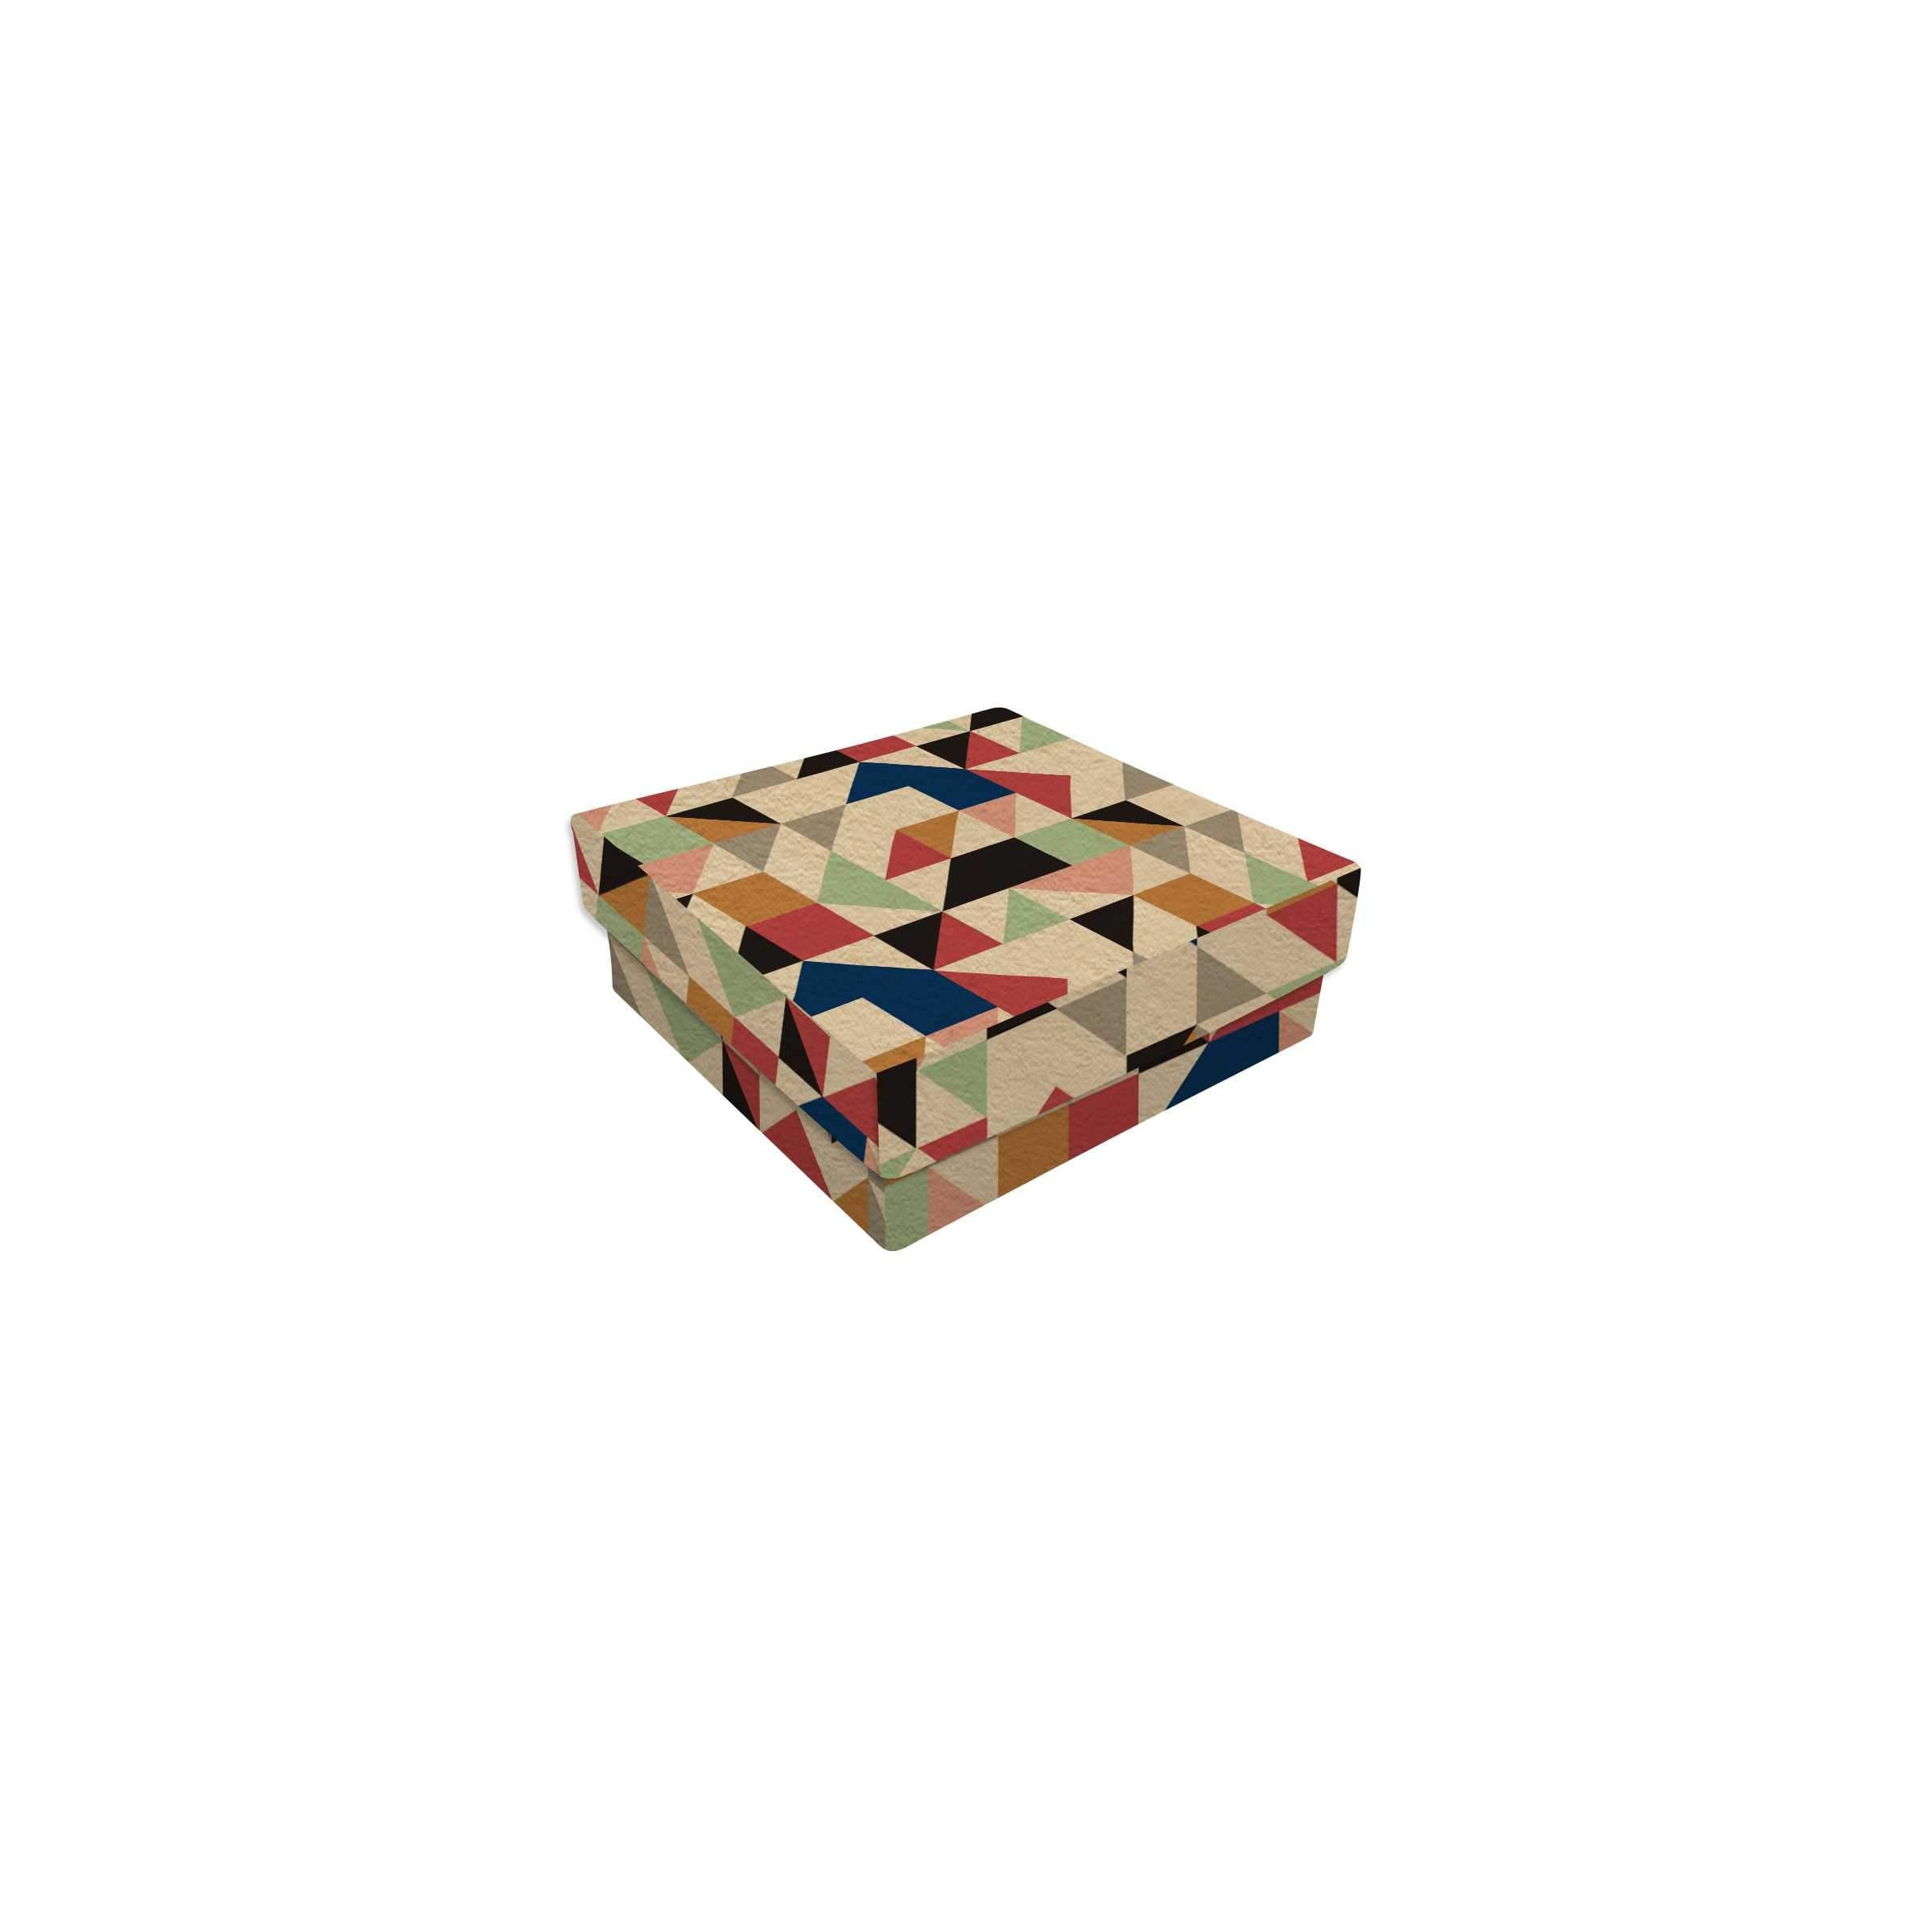 Square Gift Box: 2.75" x 2.75" x 1"